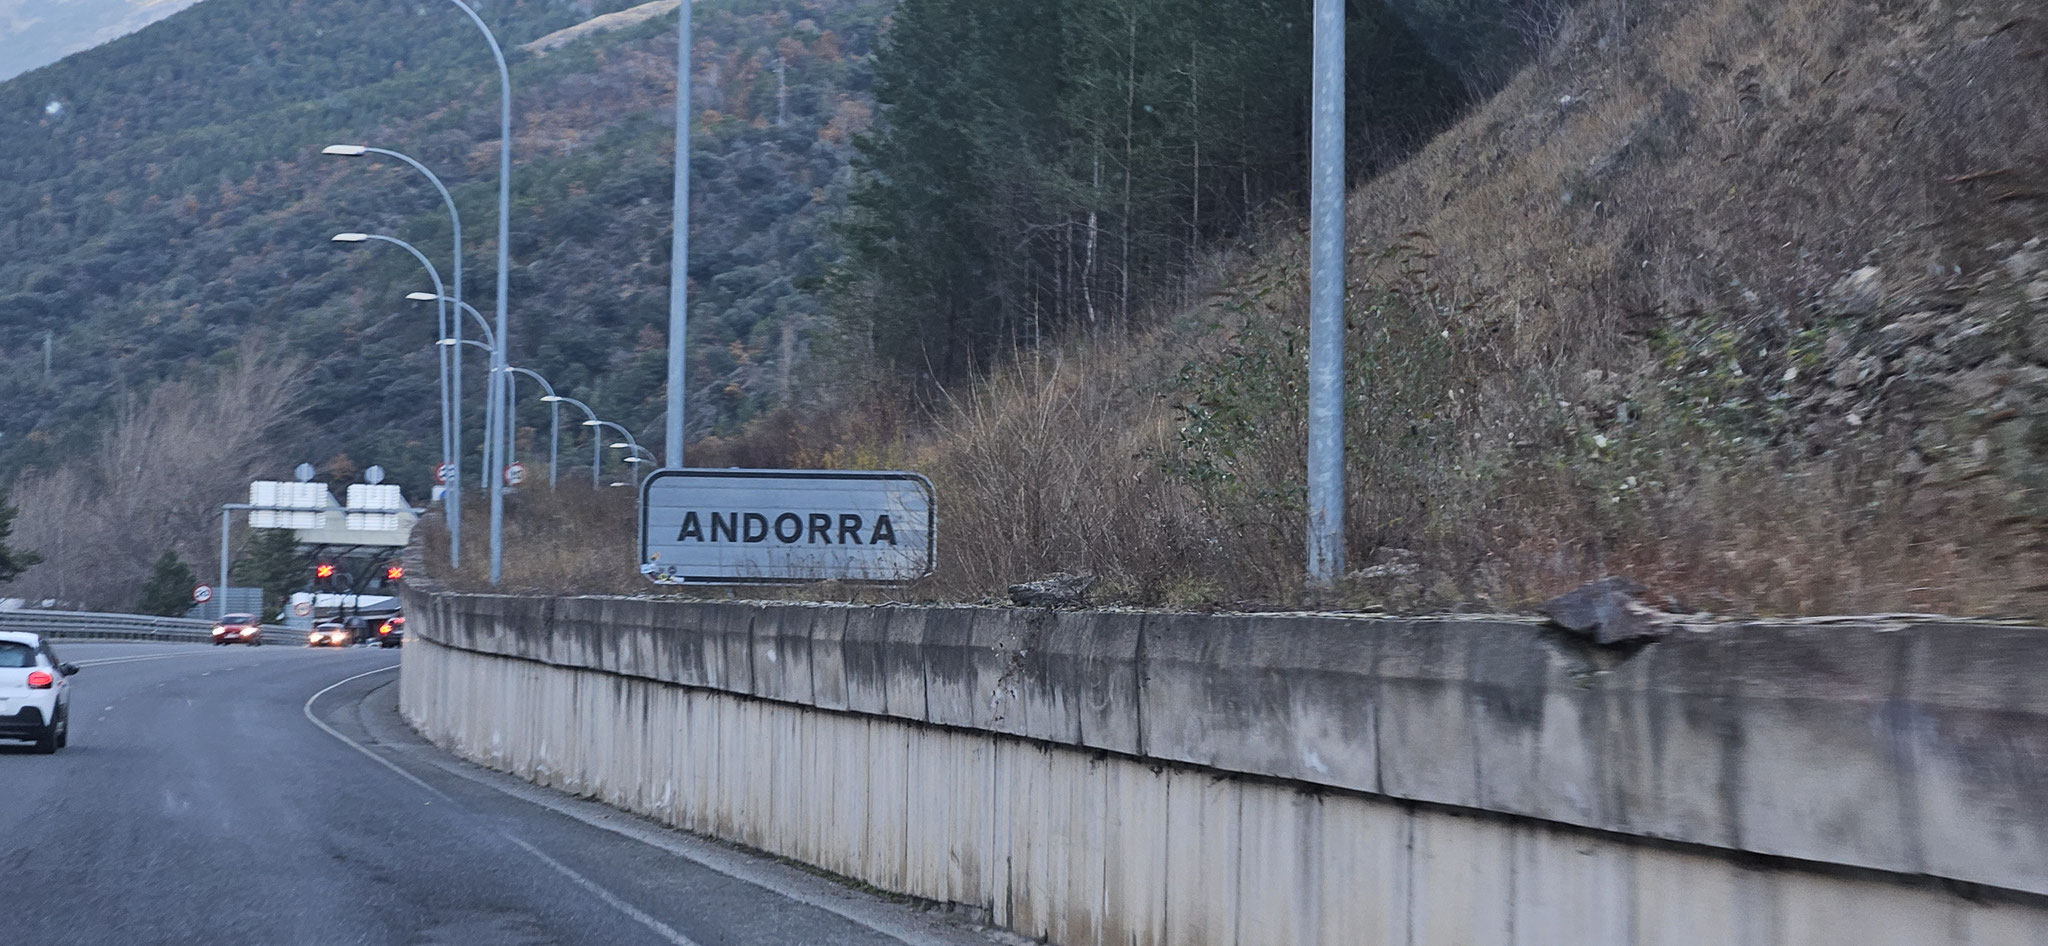 Andorra!